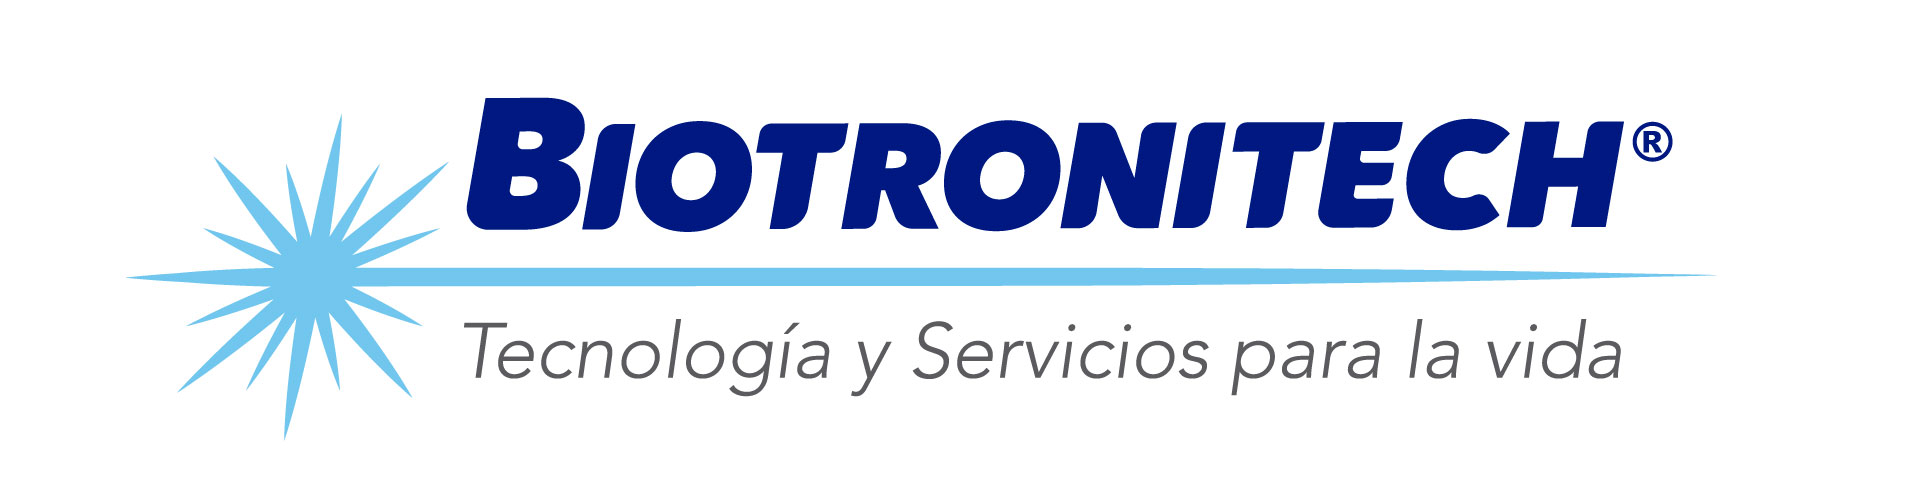 Logo-Biotronitech-fondo-blanco-letras-azules-2